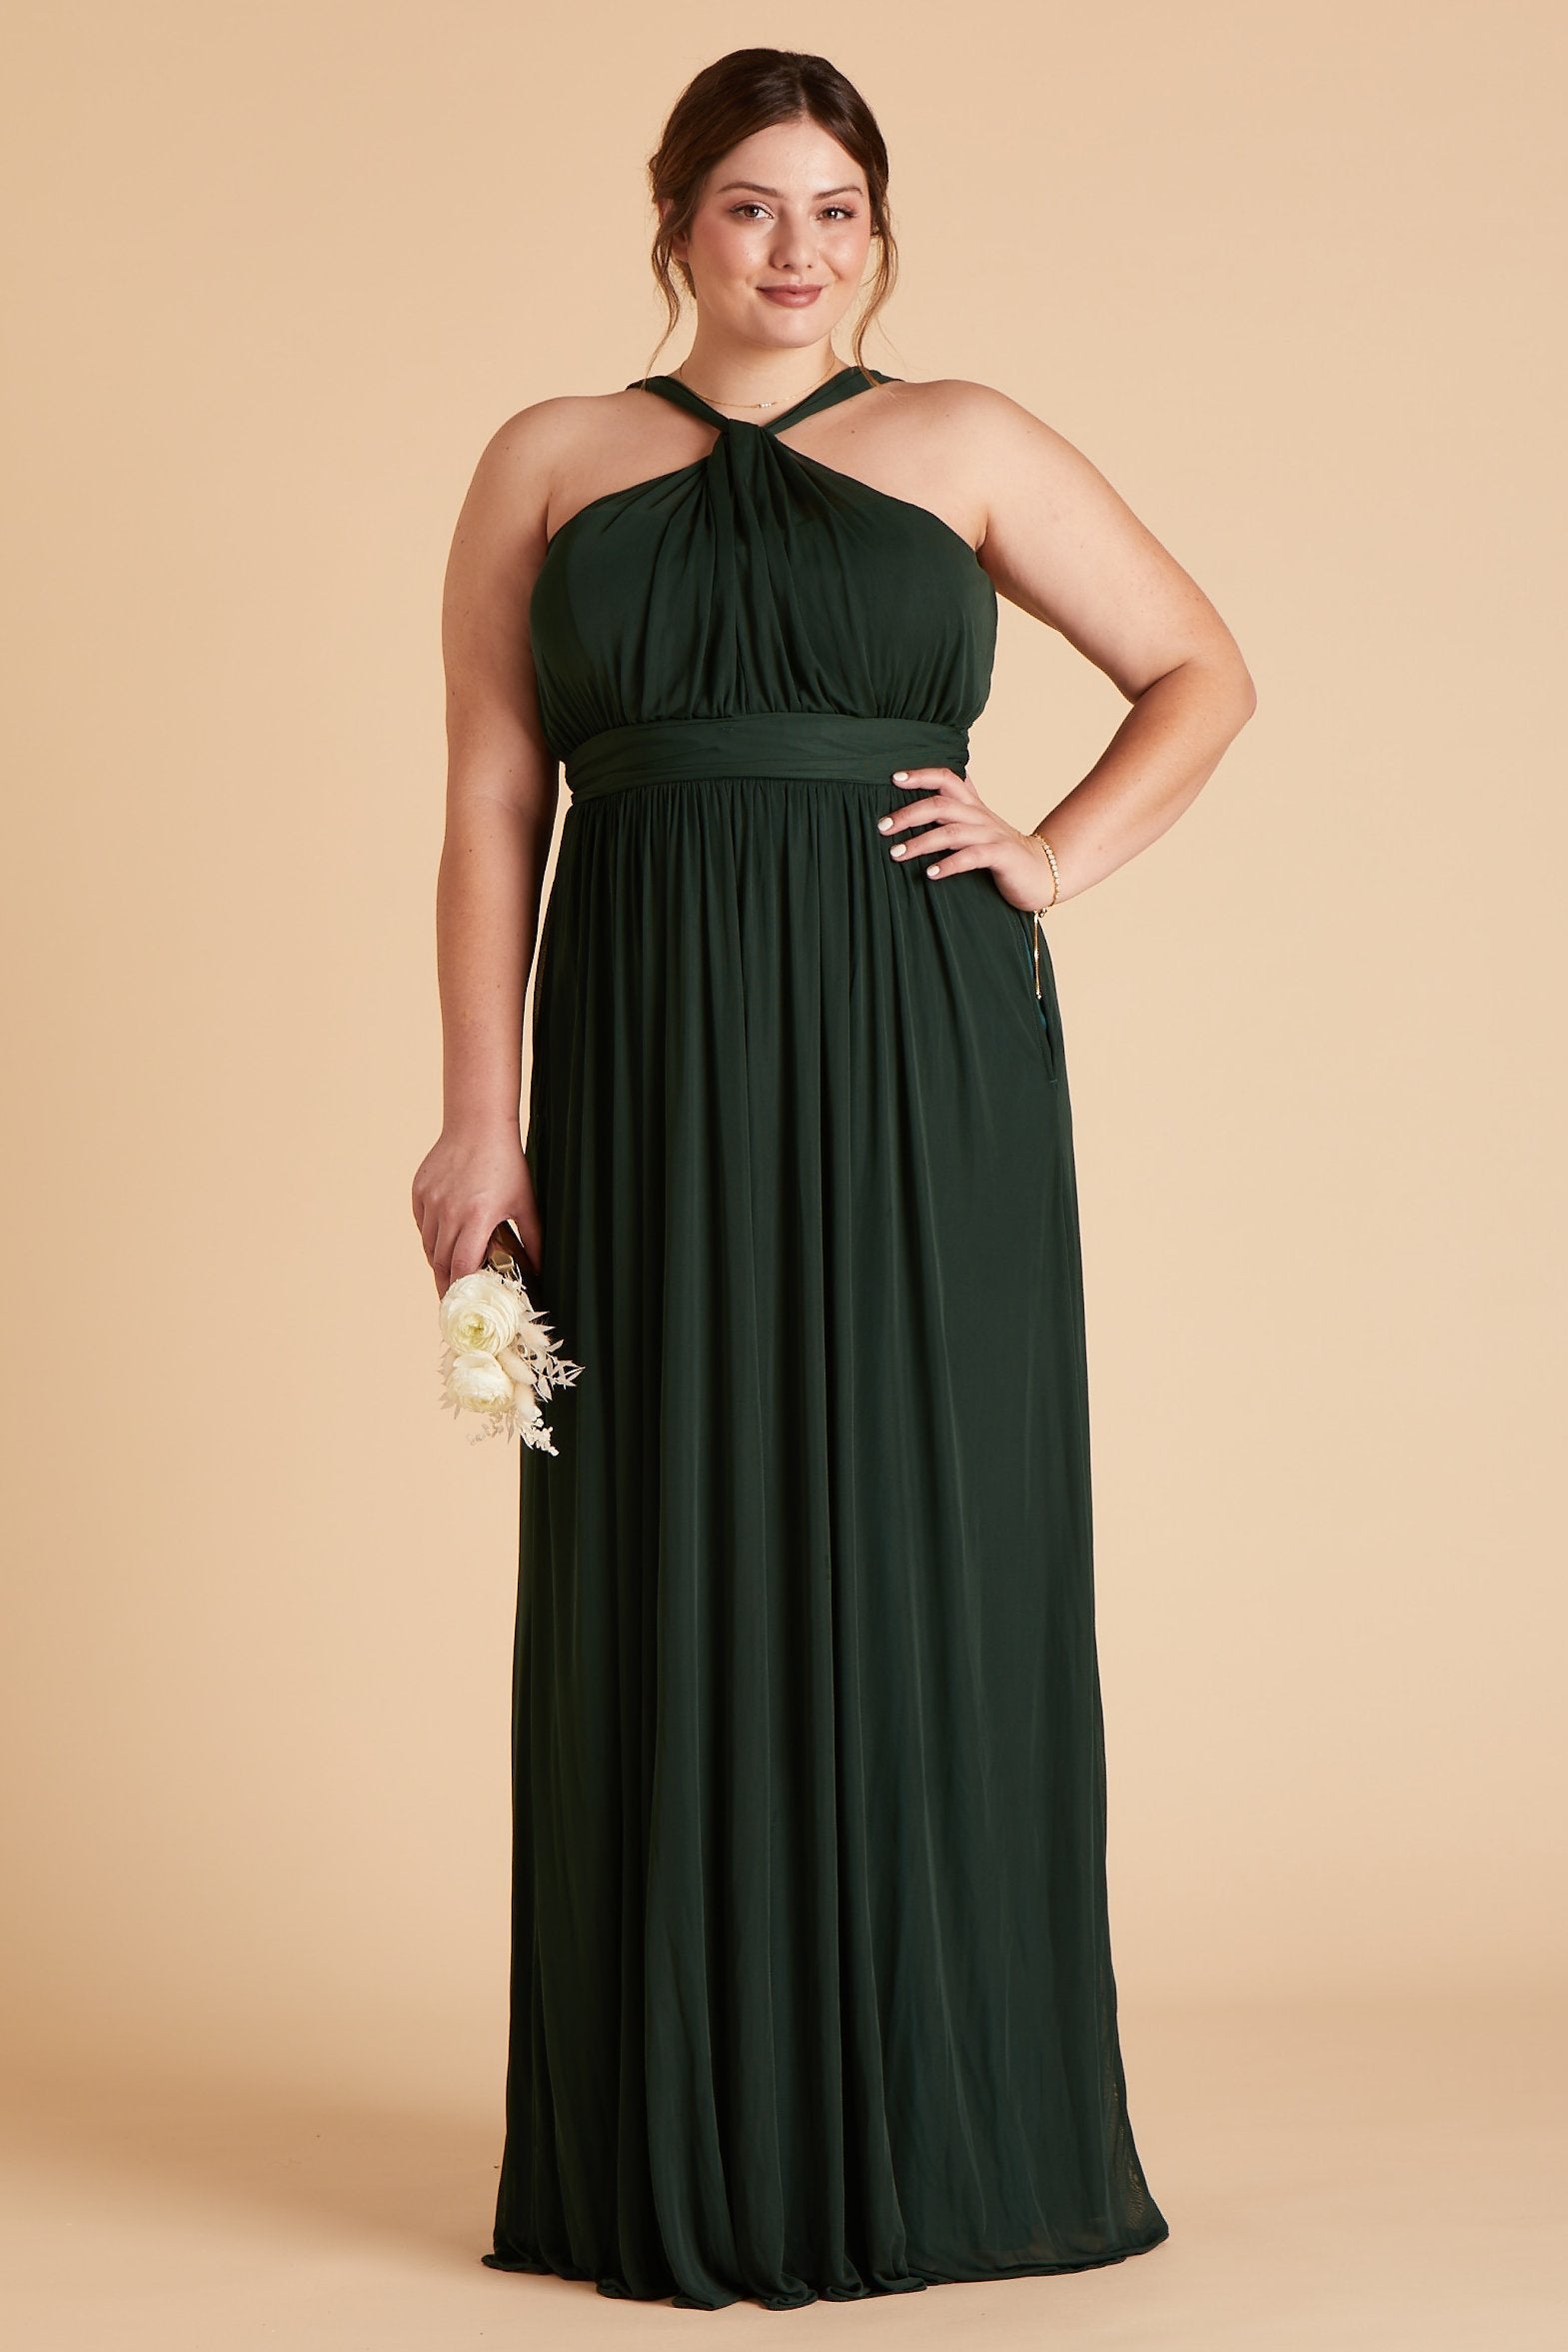 Kiko plus size bridesmaid dress in emerald green chiffon by Birdy Grey, front view